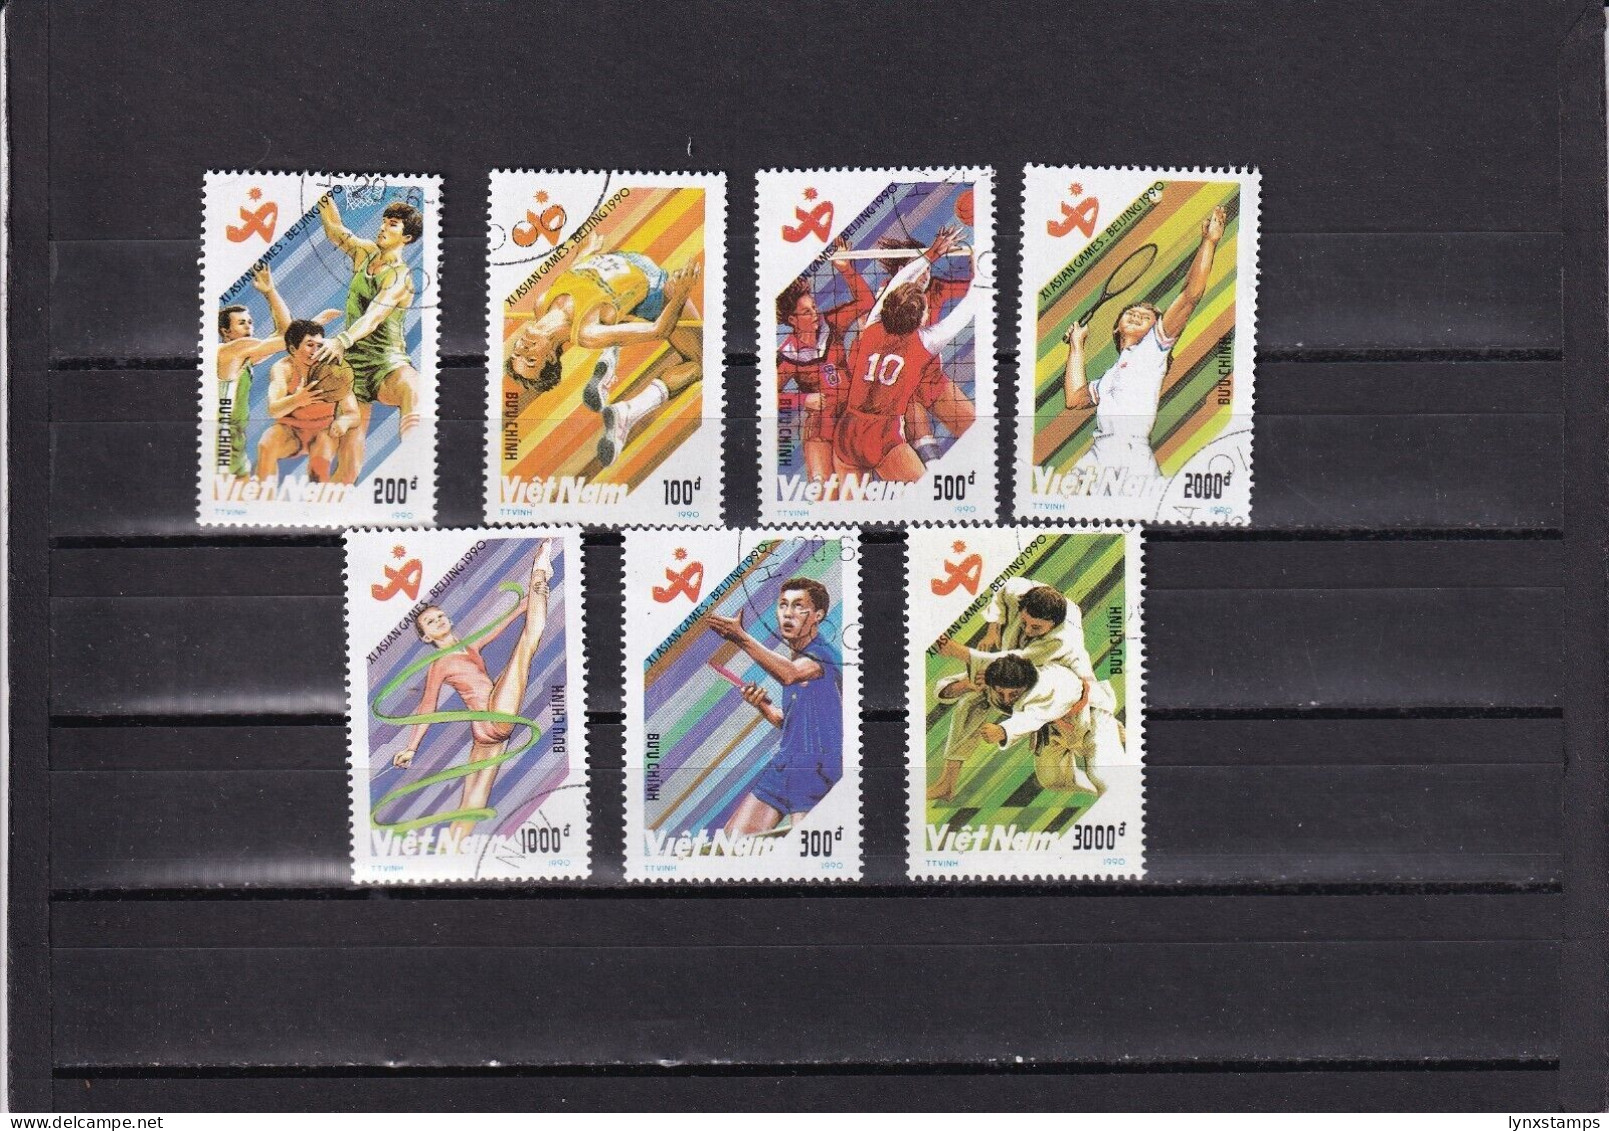 SA03 Vietnam 1990 11th Asian Games Beijing'90 Used Stamps - Vietnam